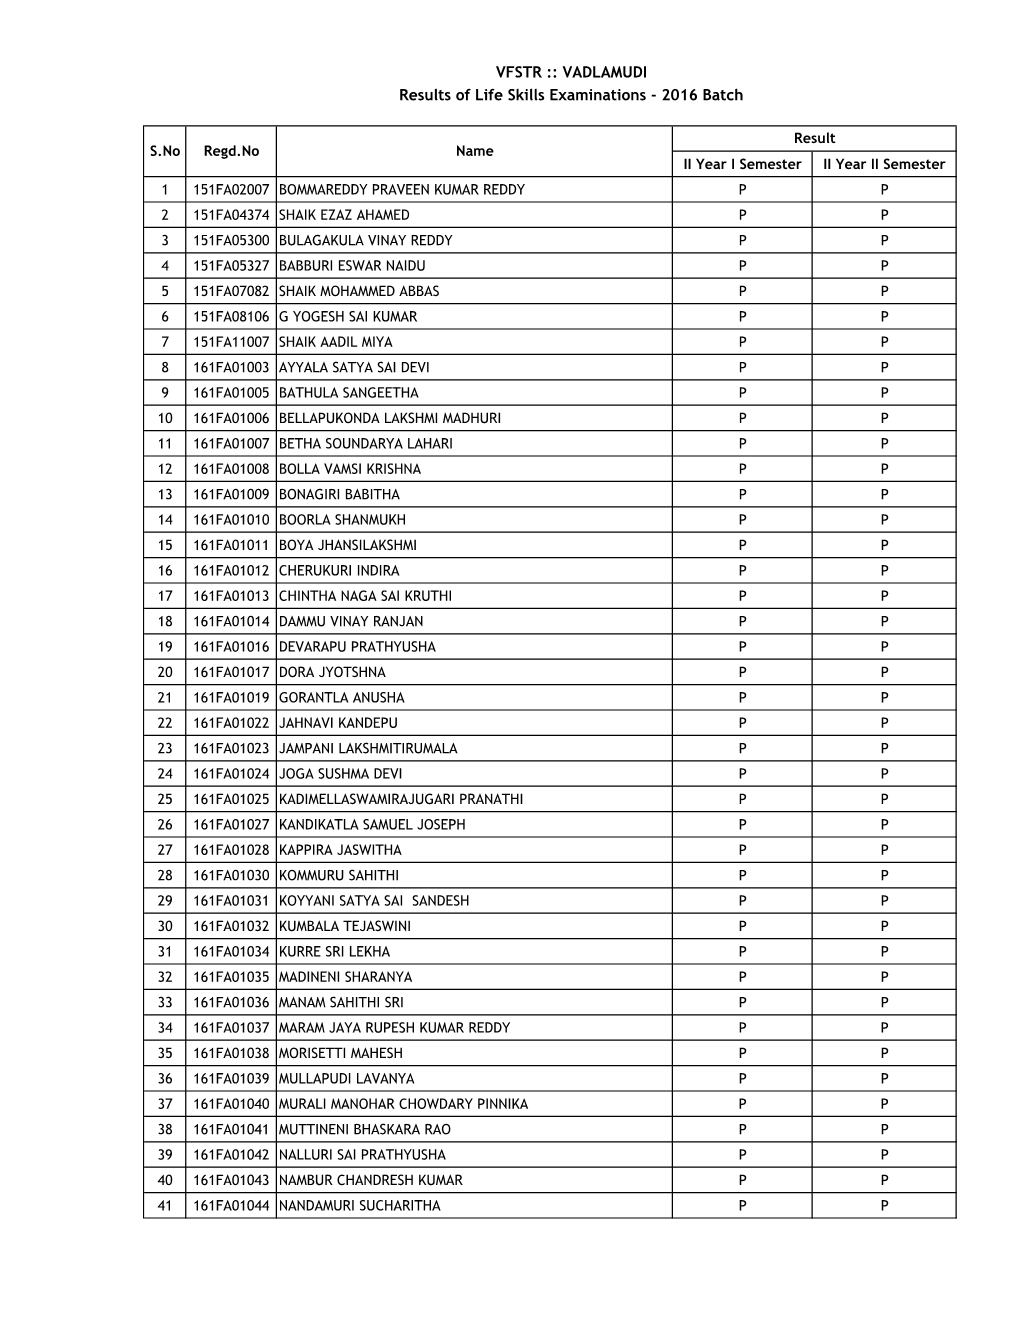 VADLAMUDI Results of Life Skills Examinations - 2016 Batch